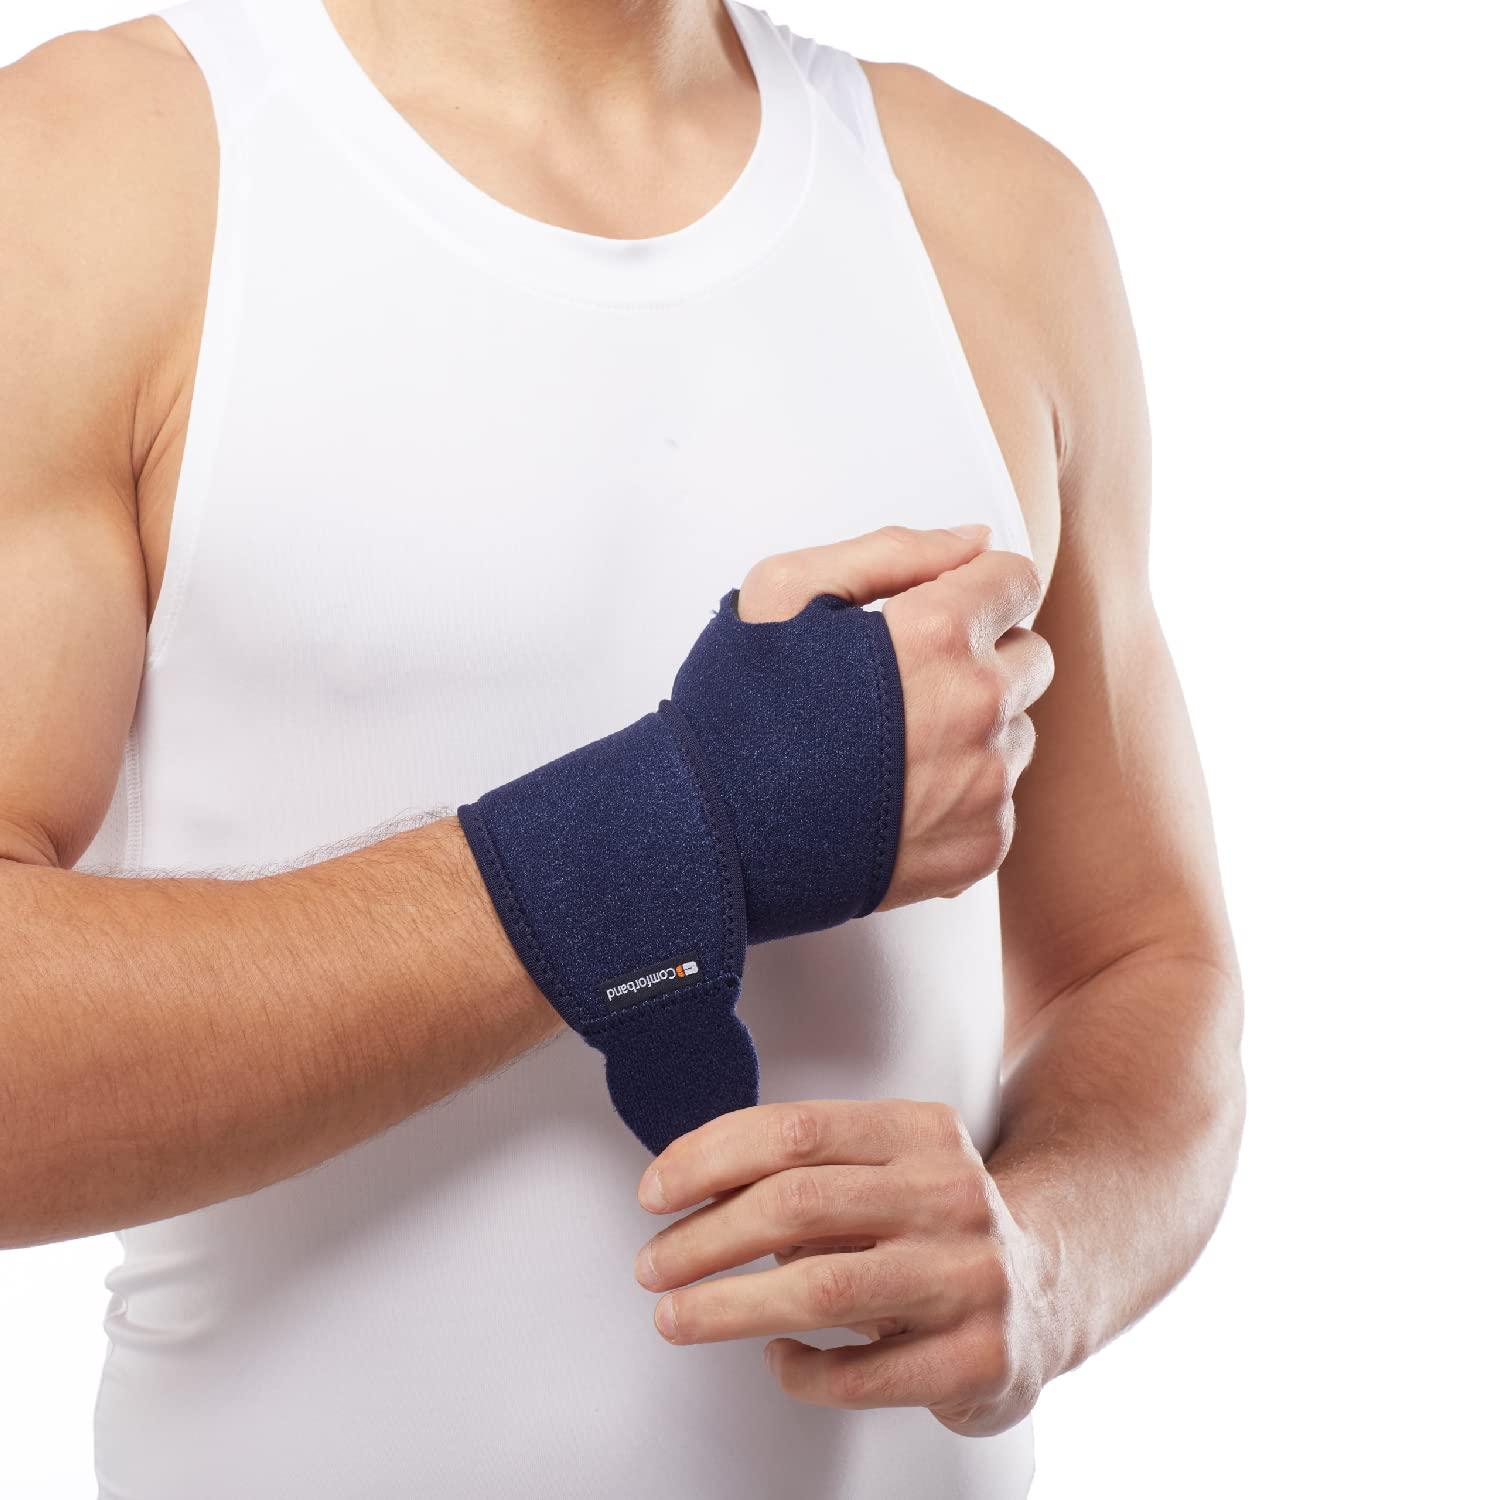 Adjustable Wrist Brace - for Joint Pain, Arthritis, Sprains, Strains,  Instability, Gym, Sports, Golf, Tennis, Basketball - Adjustable Compression  